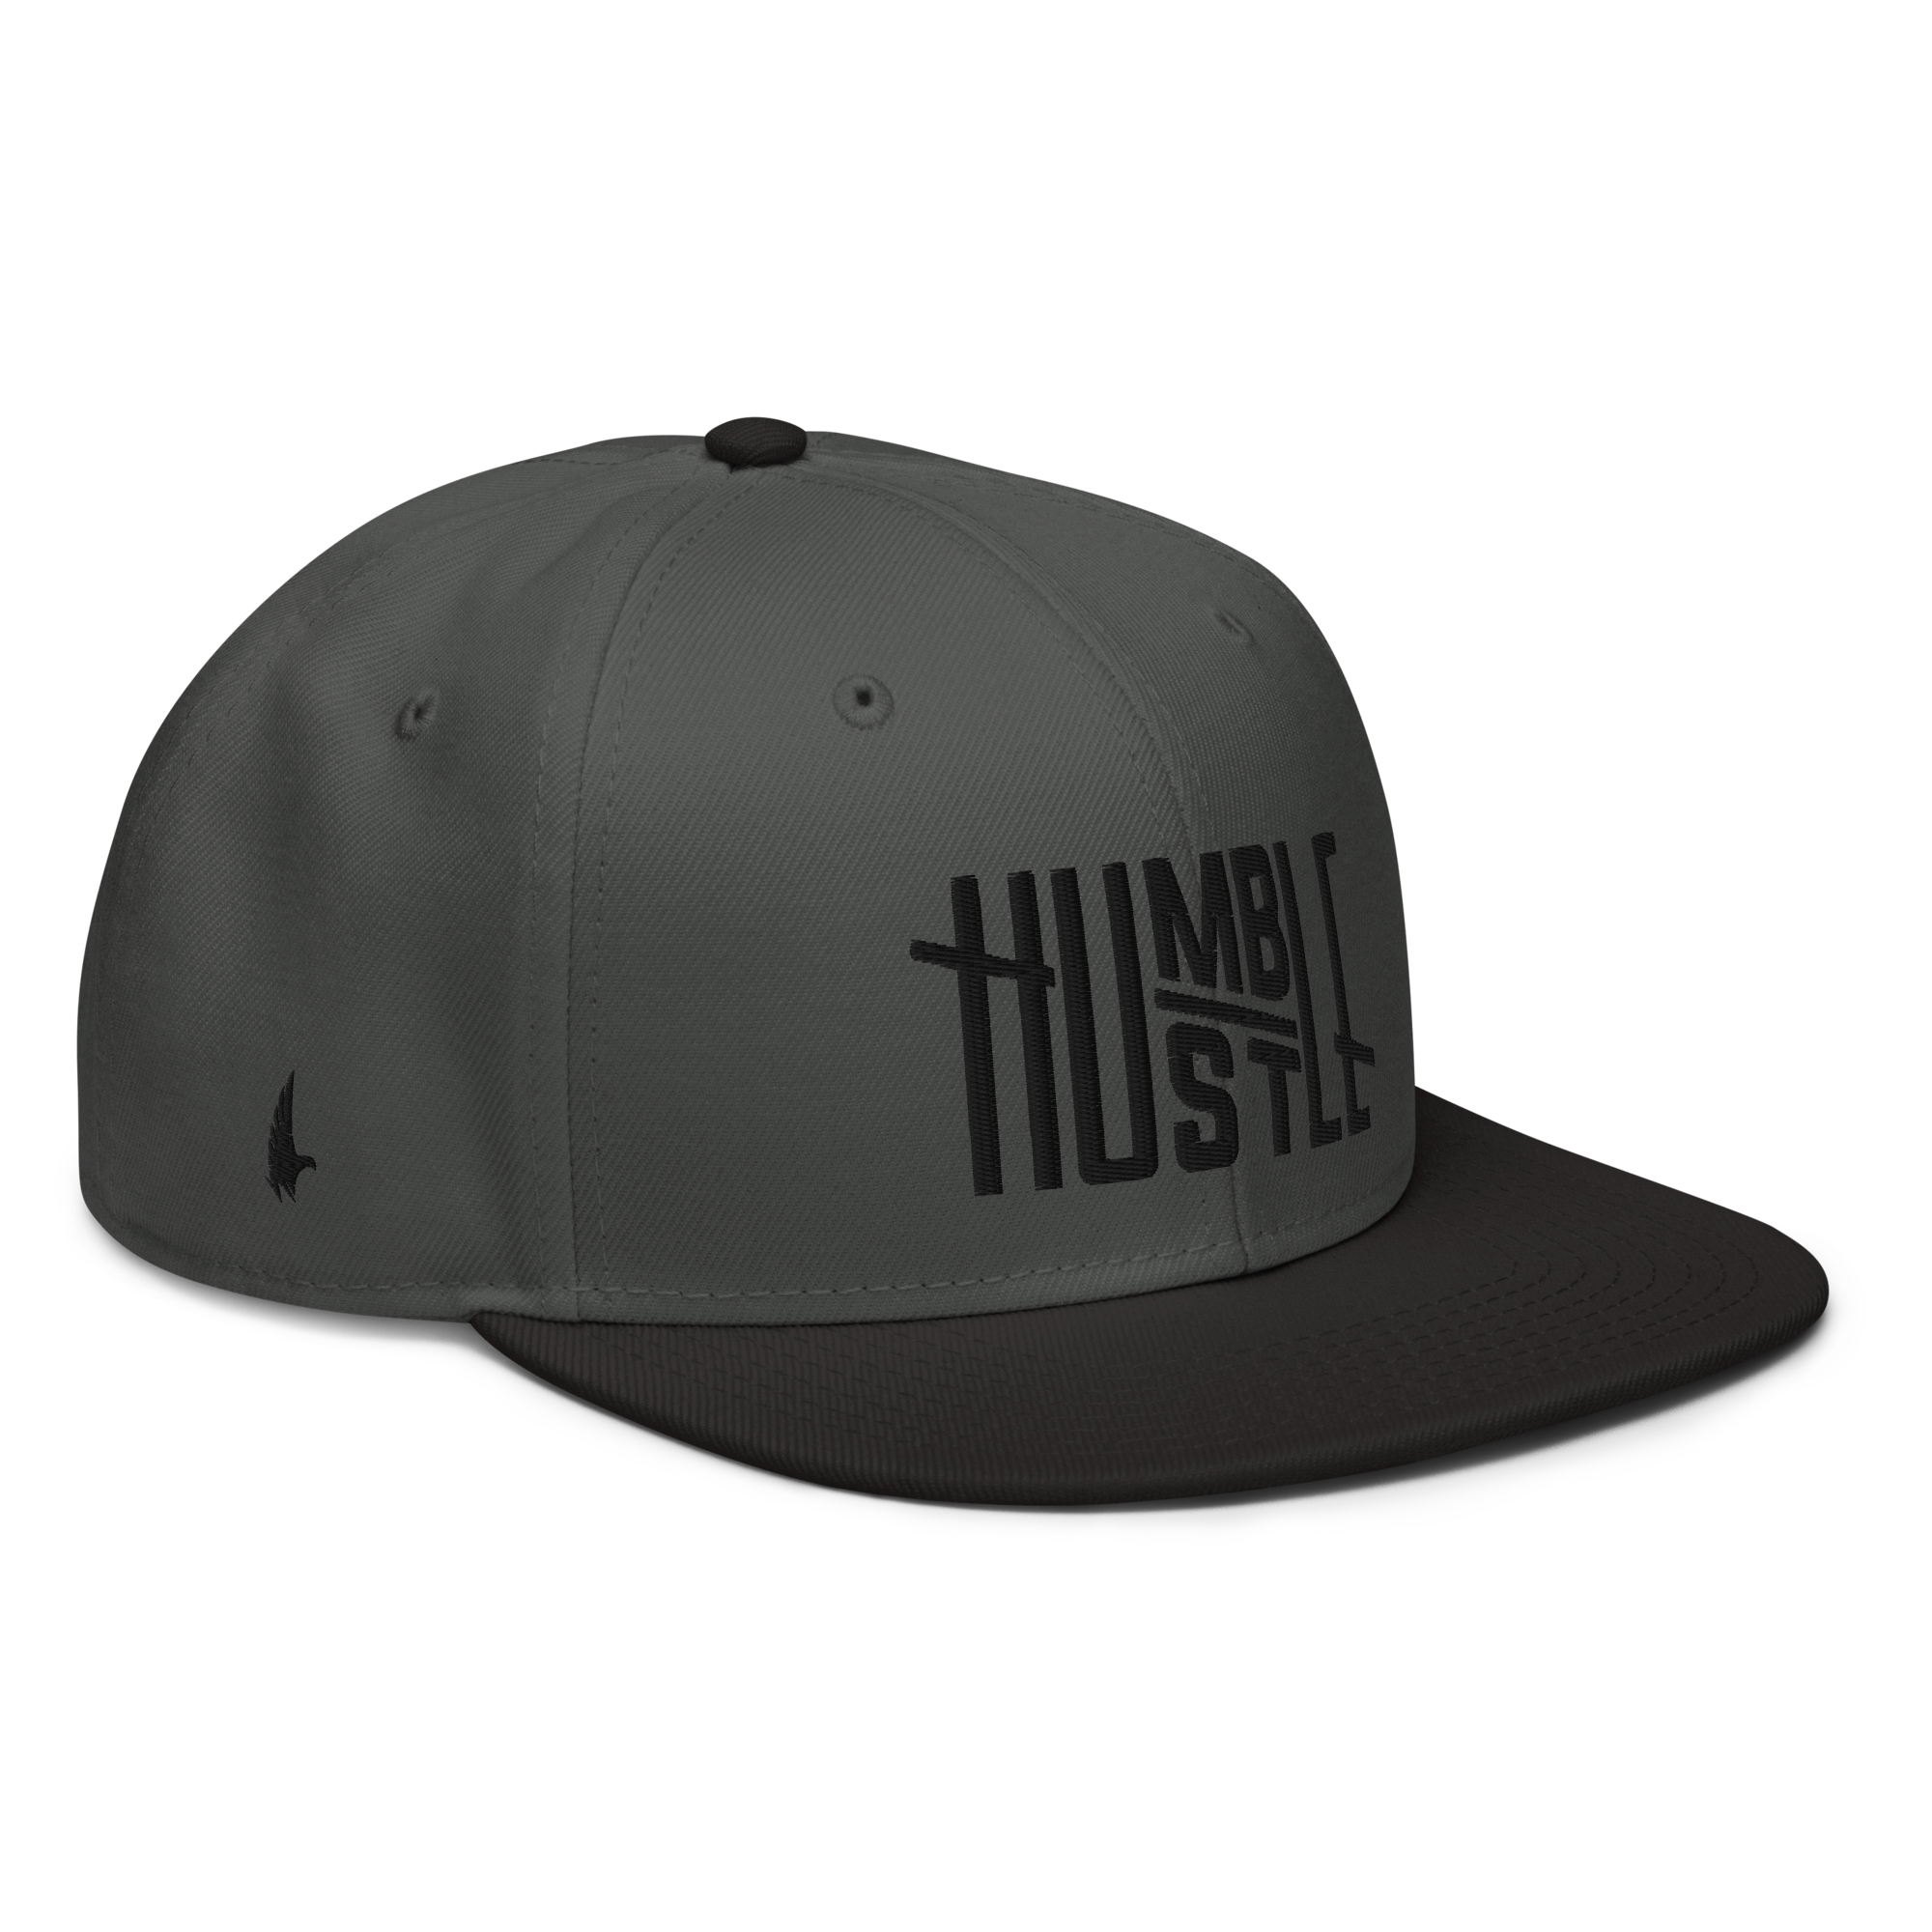 Humble Hustle Snapback Hat - Charcoal Gray/Black/Black OS - Loyalty Vibes